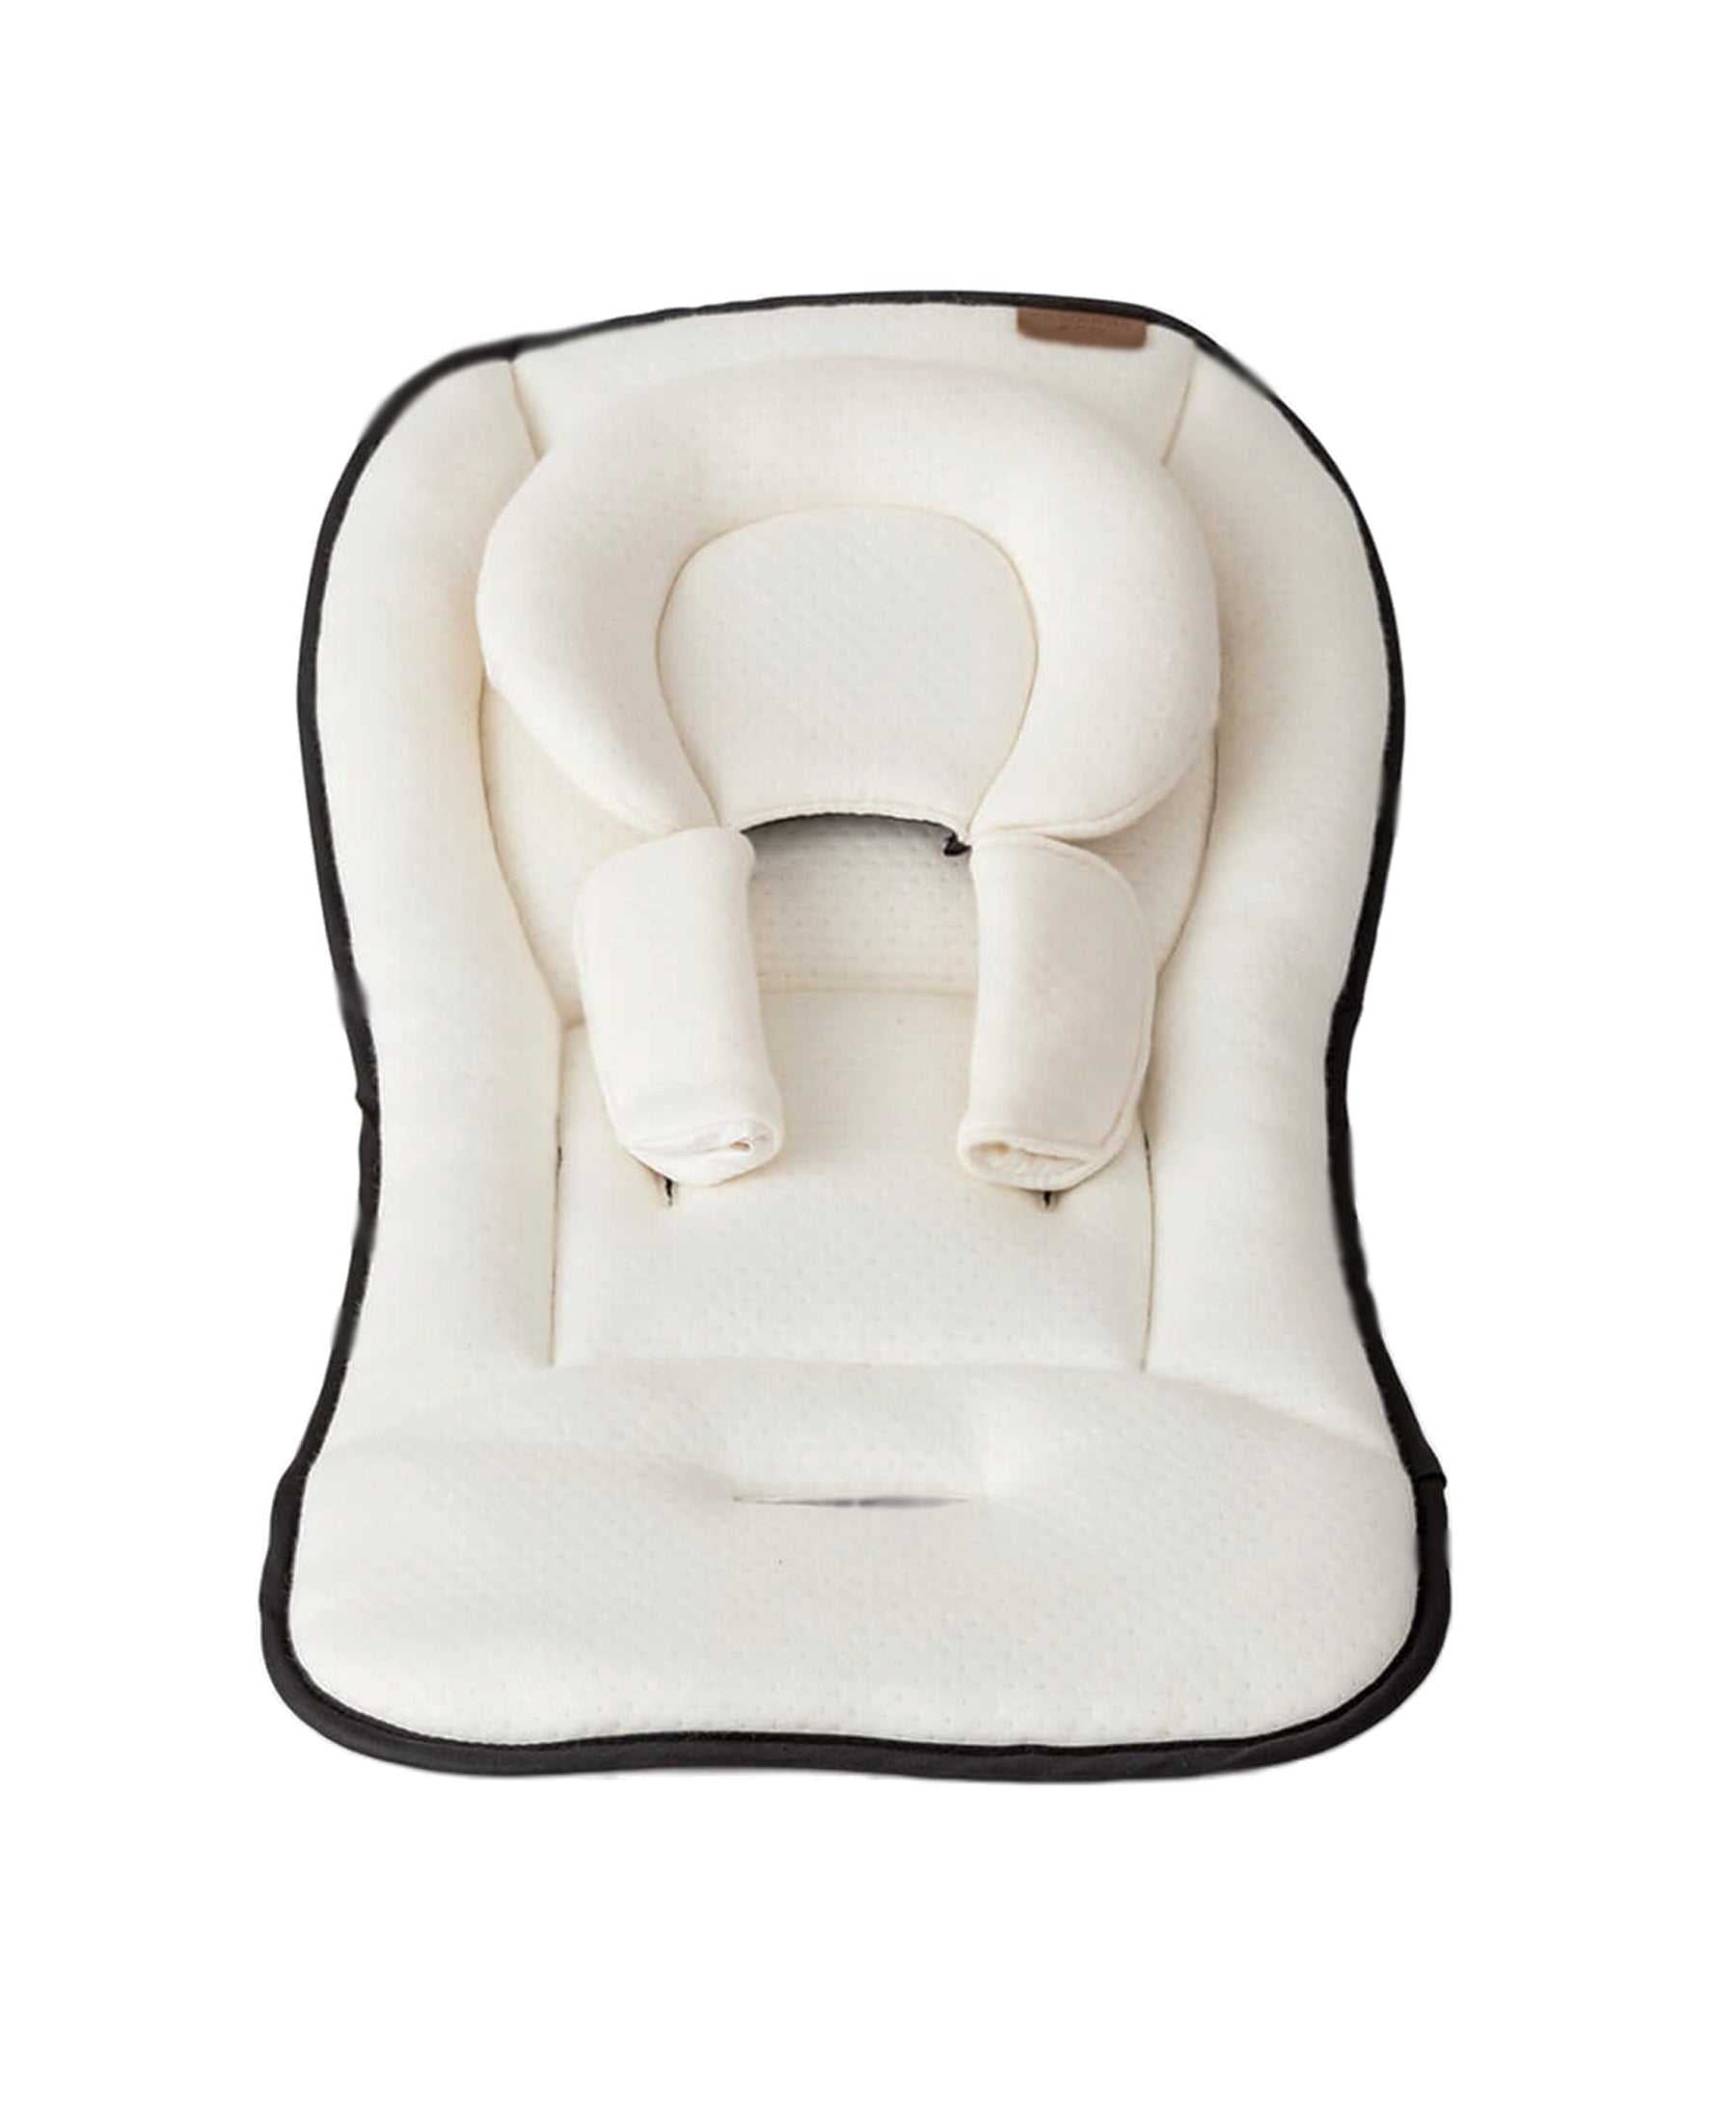 Newborn Insert Cushion for Edwards & Co Olive / Oscar M - Tiny Tots Baby Store 